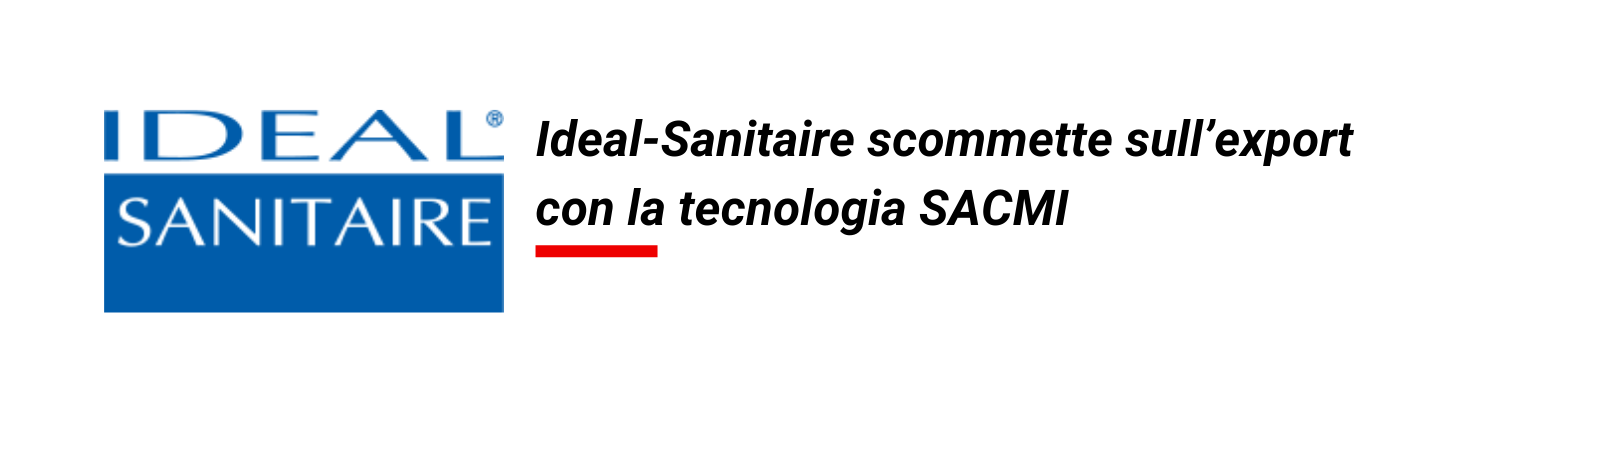 Ideal-Sanitaire ориентируется на экспорт, инвестируя в технологию SACMI